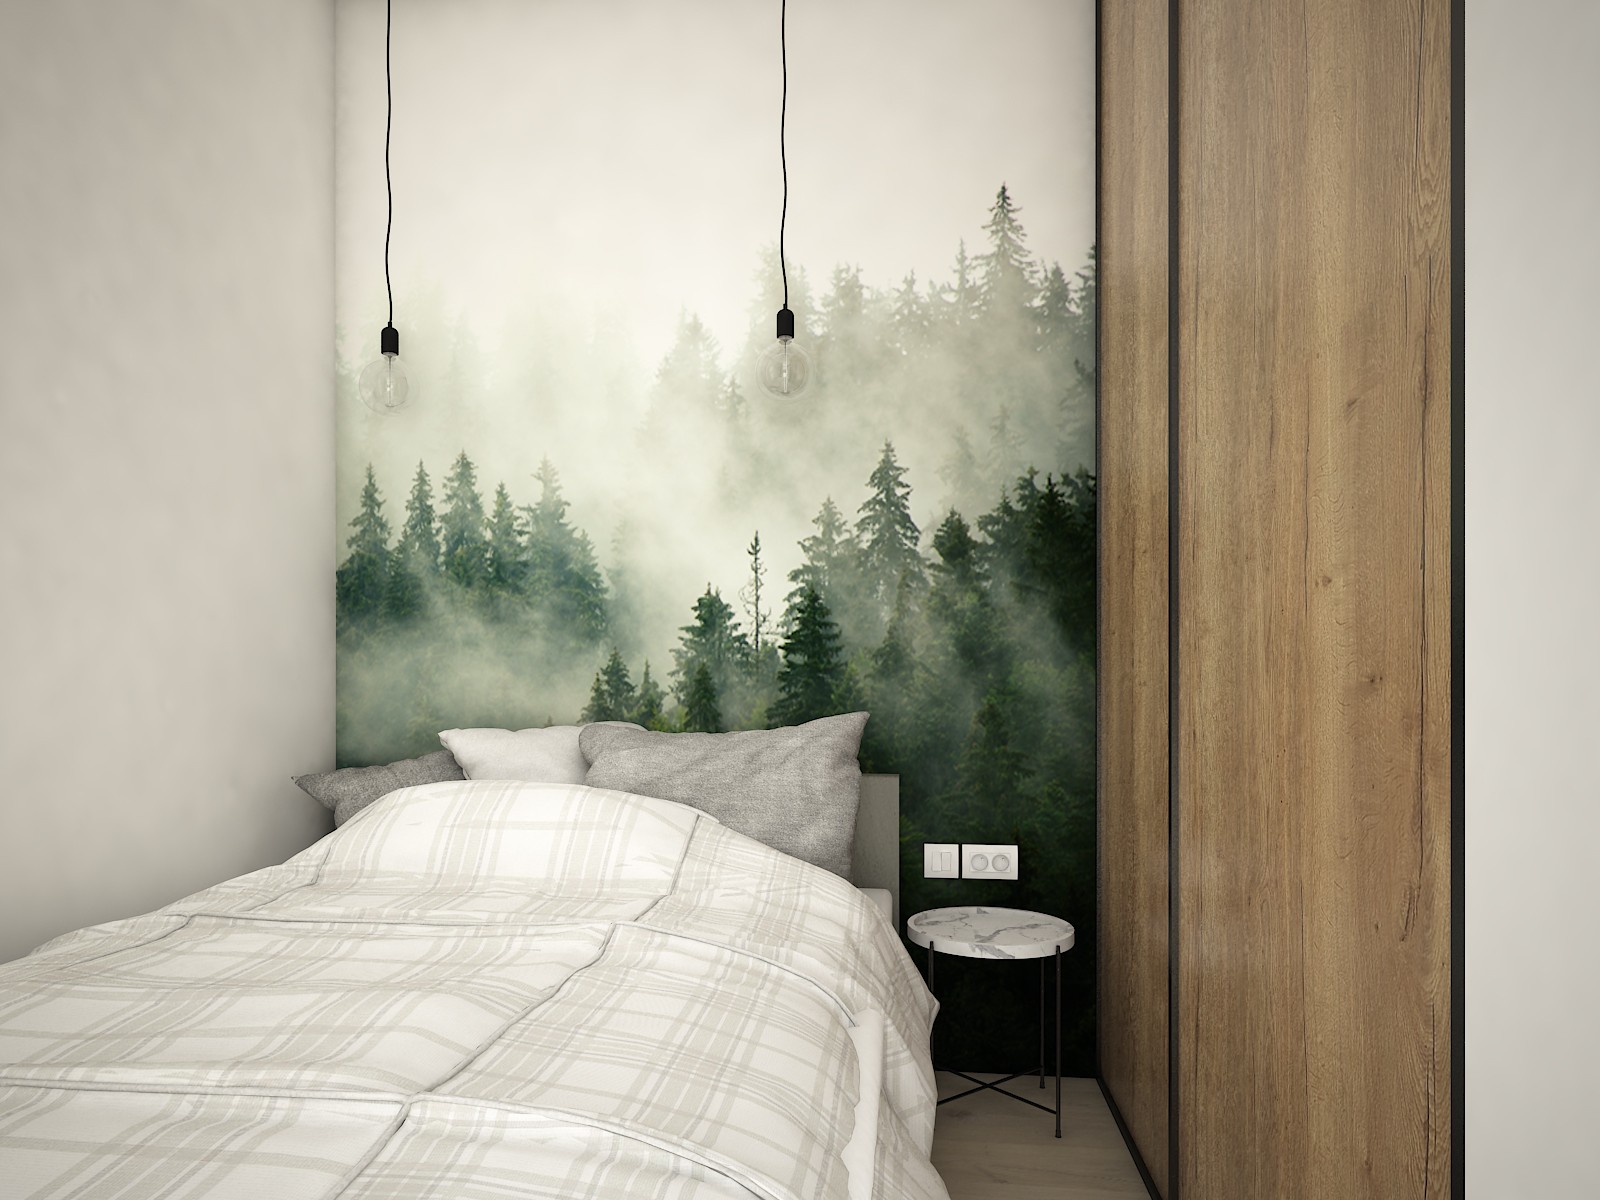 tapeta las za mgłą